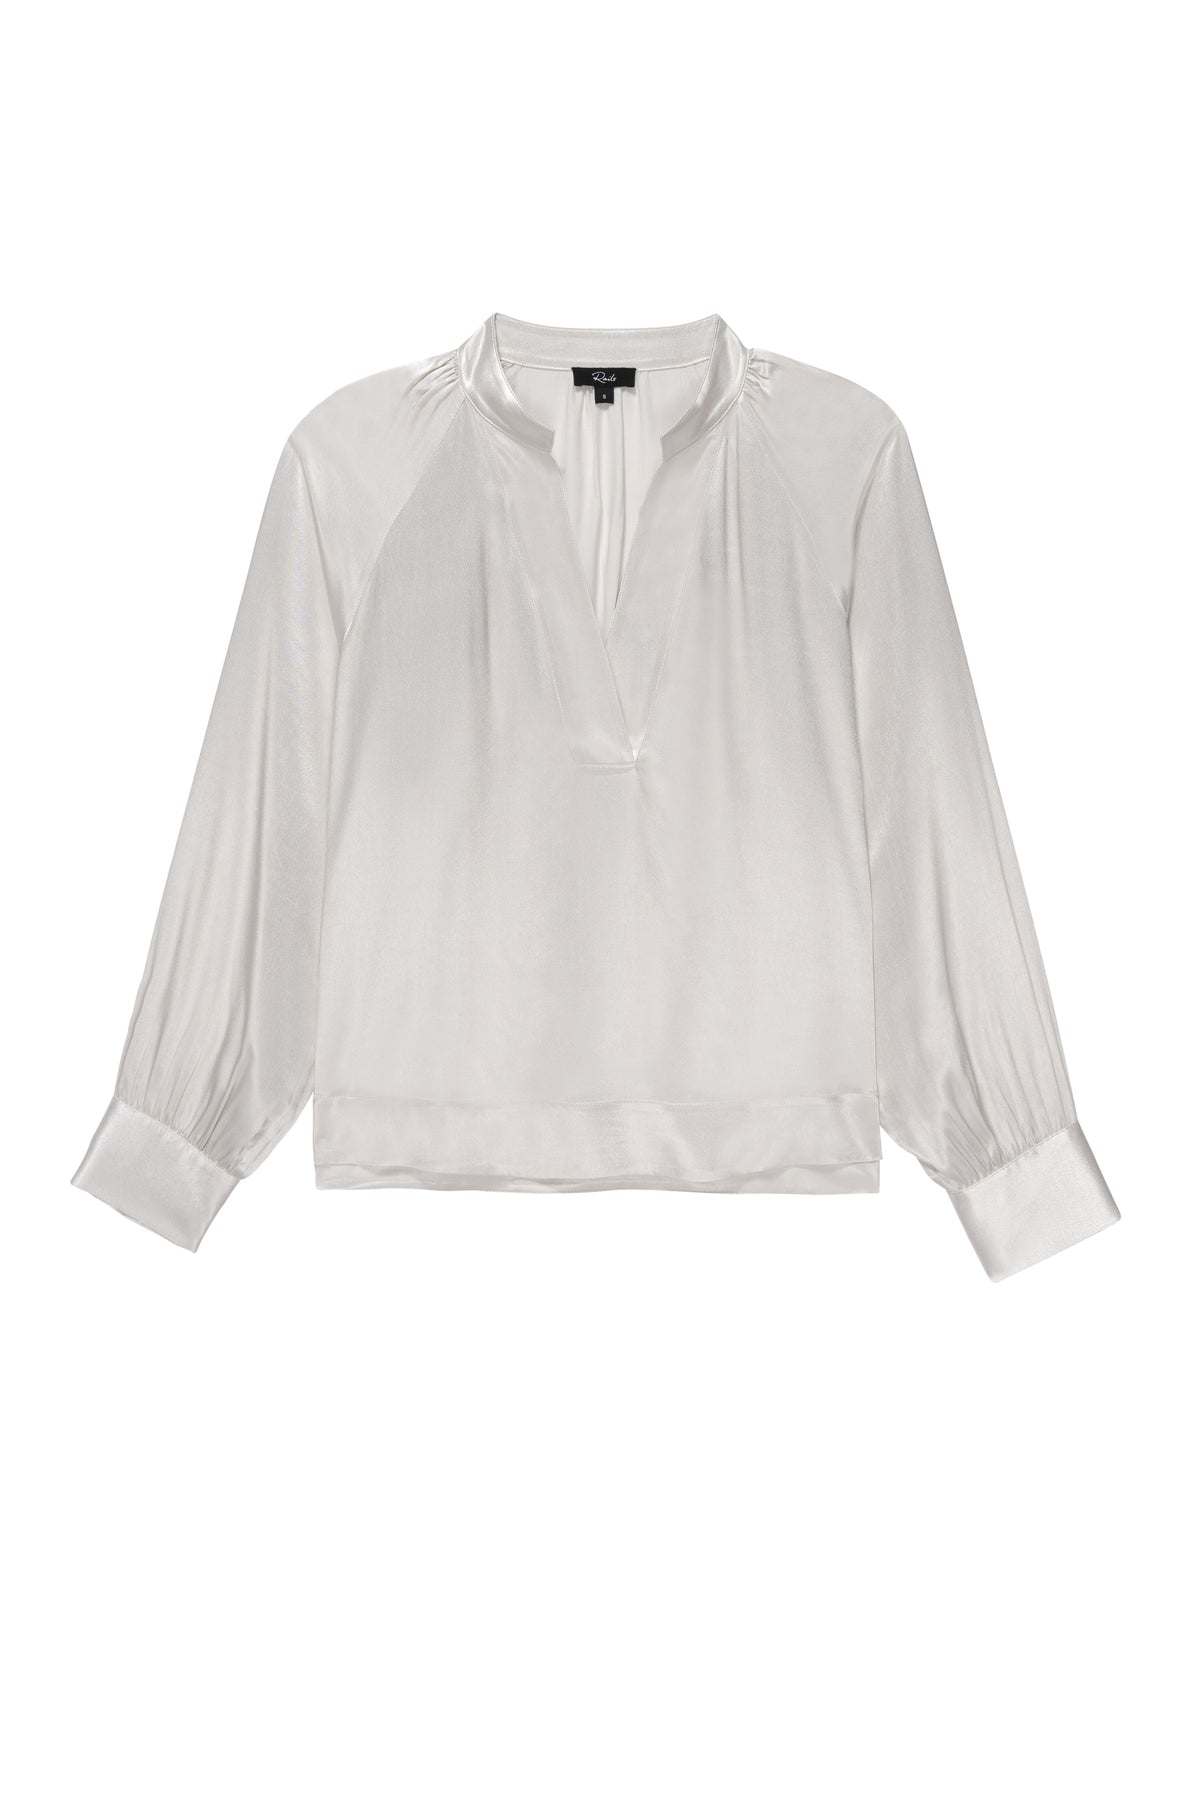 Oyster white notch neck raglan long sleeved satin blouse